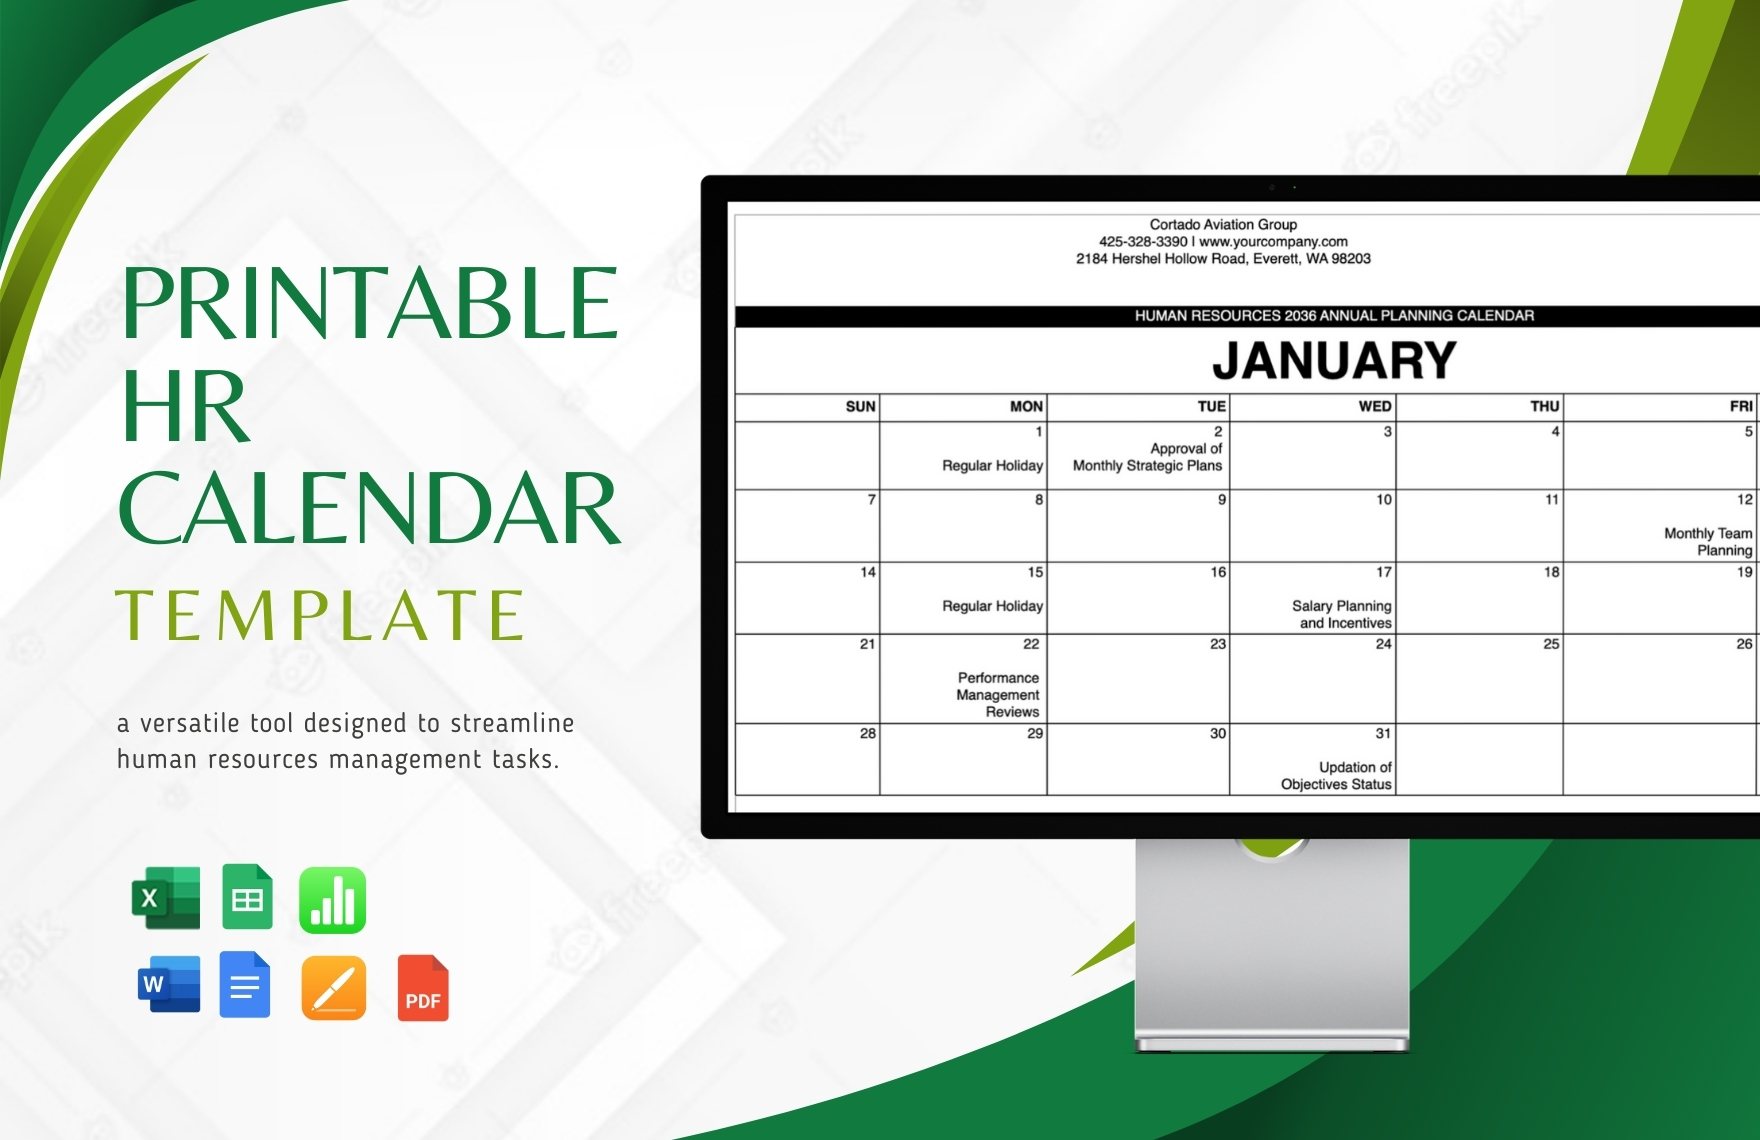 Printable HR Calendar Template